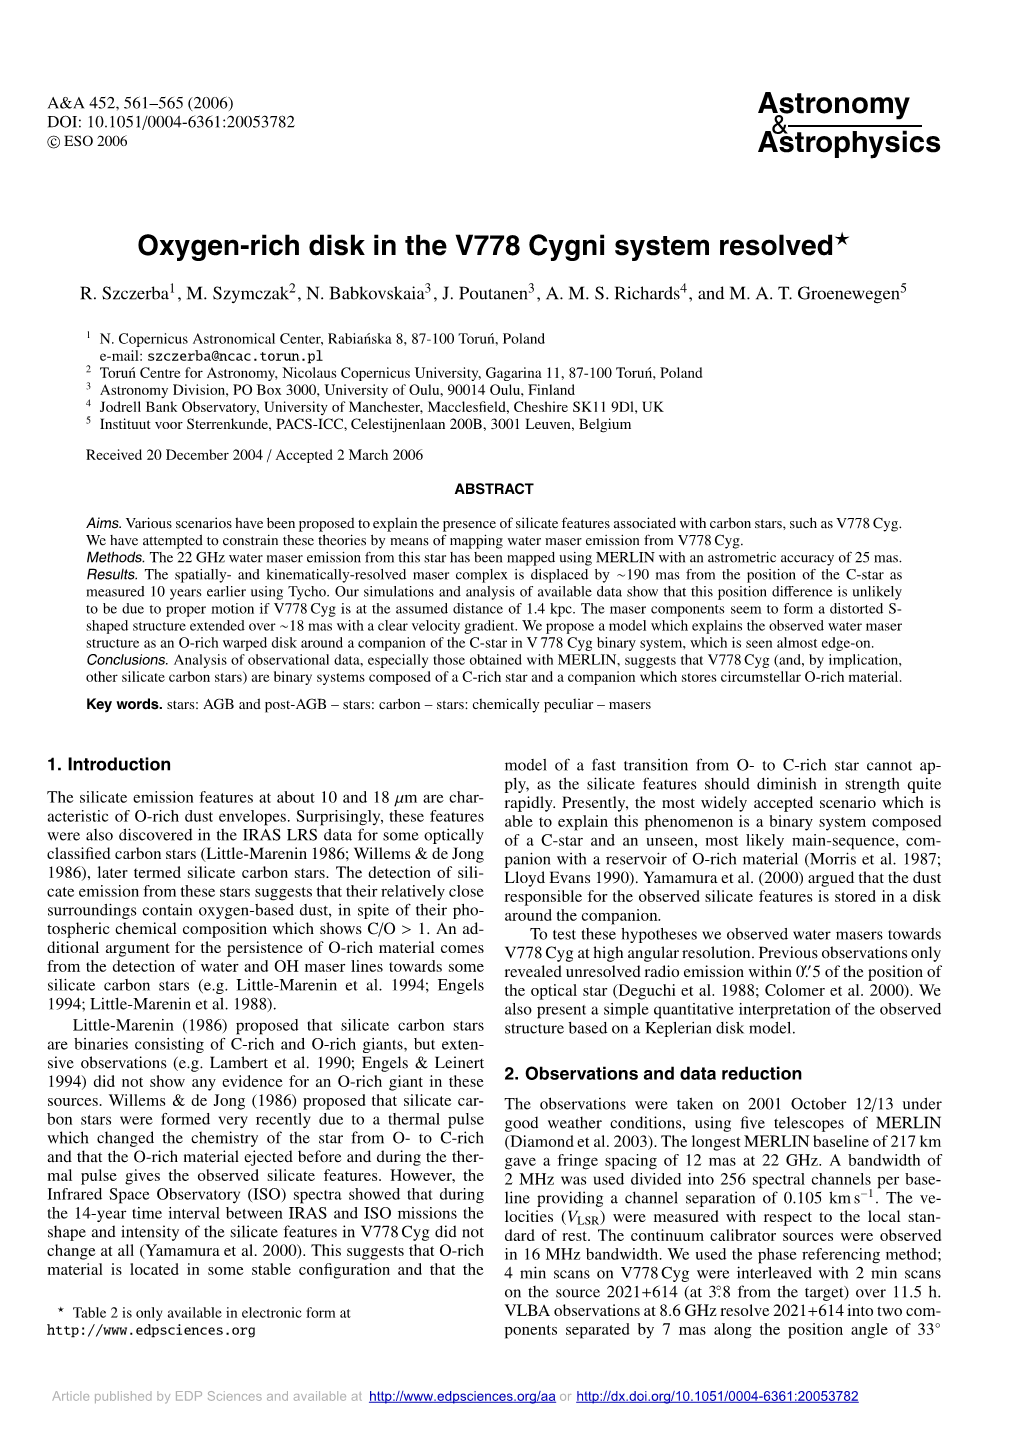 Oxygen-Rich Disk in the V778 Cygni System Resolved